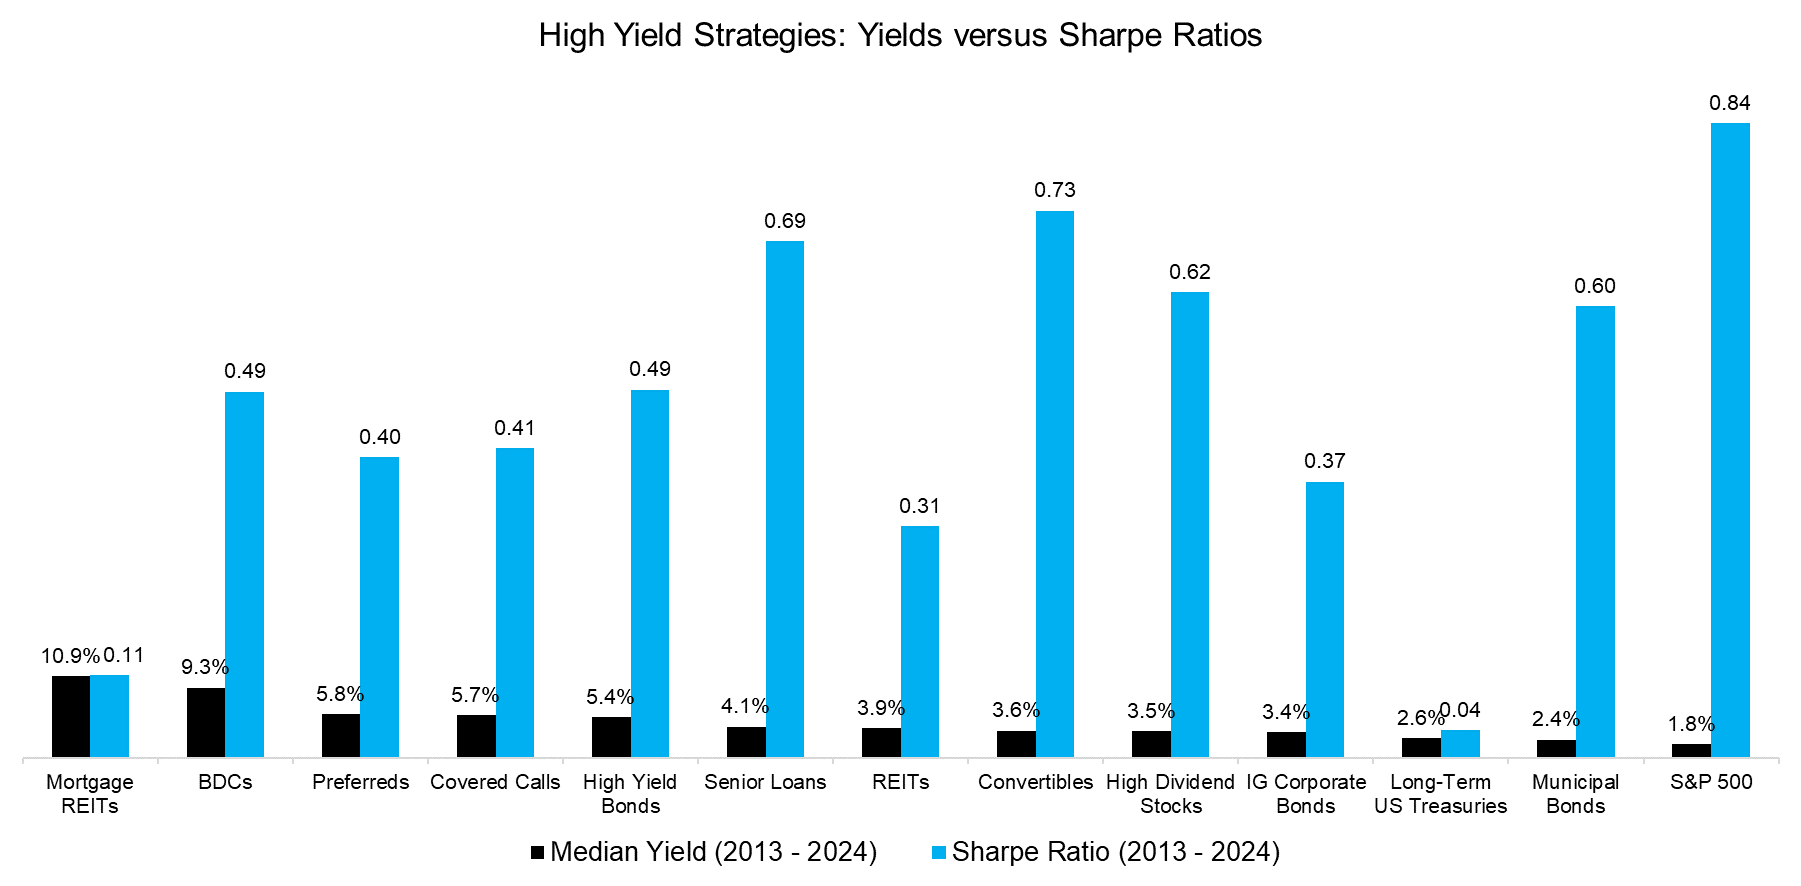 High Yield Strategies Yields versus Sharpe Ratios